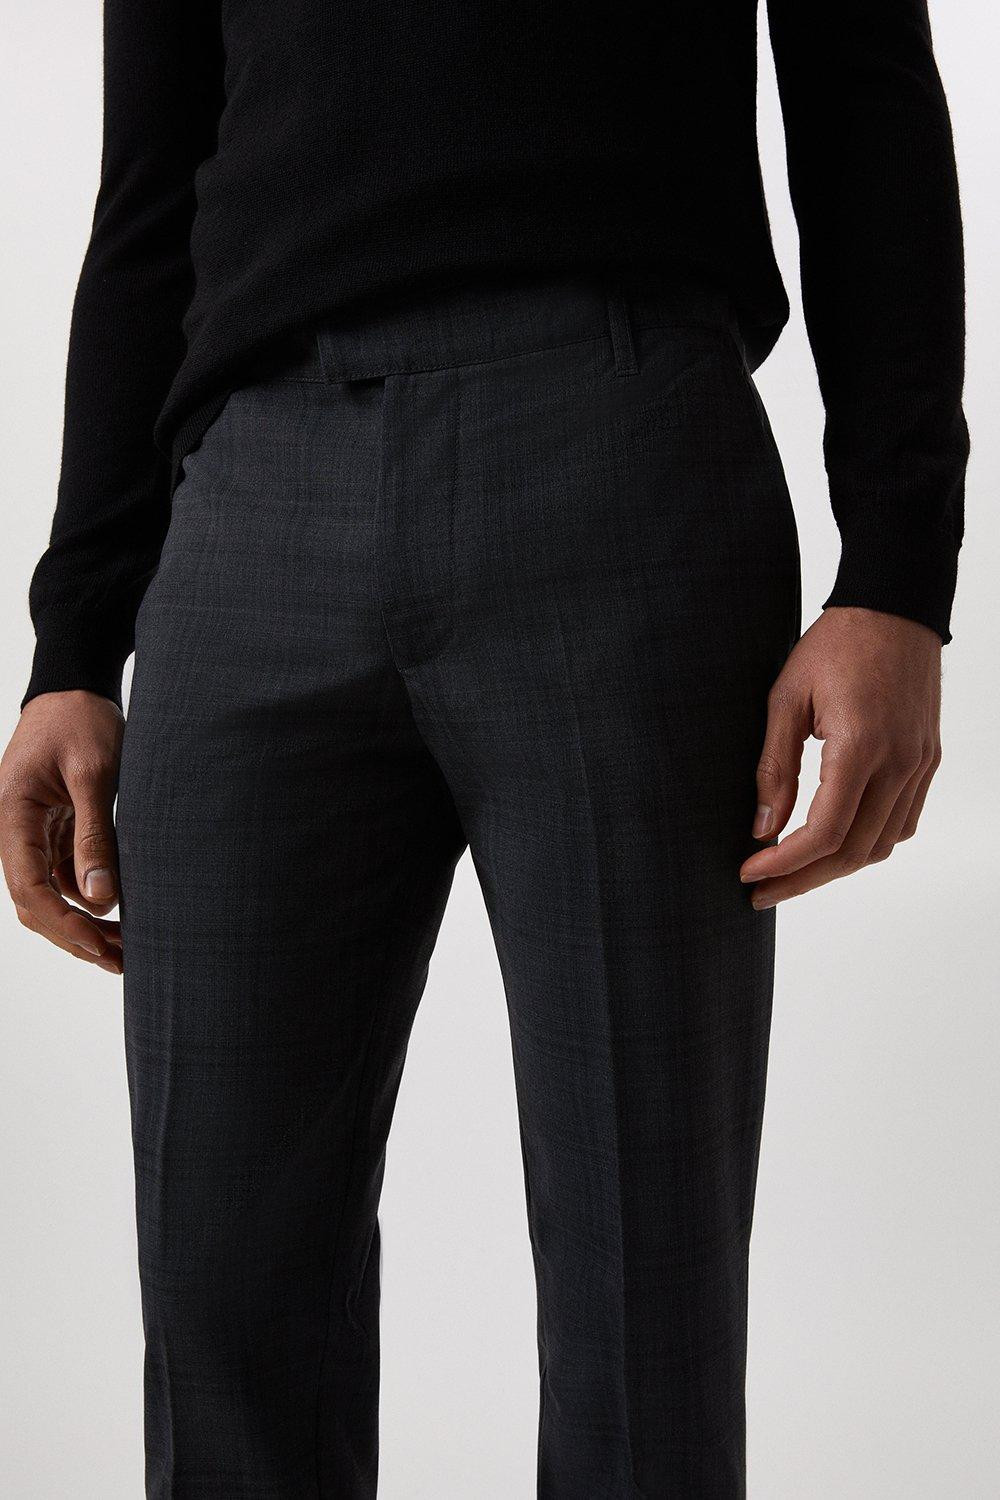 eleganckie spodnie wzór kratka kant